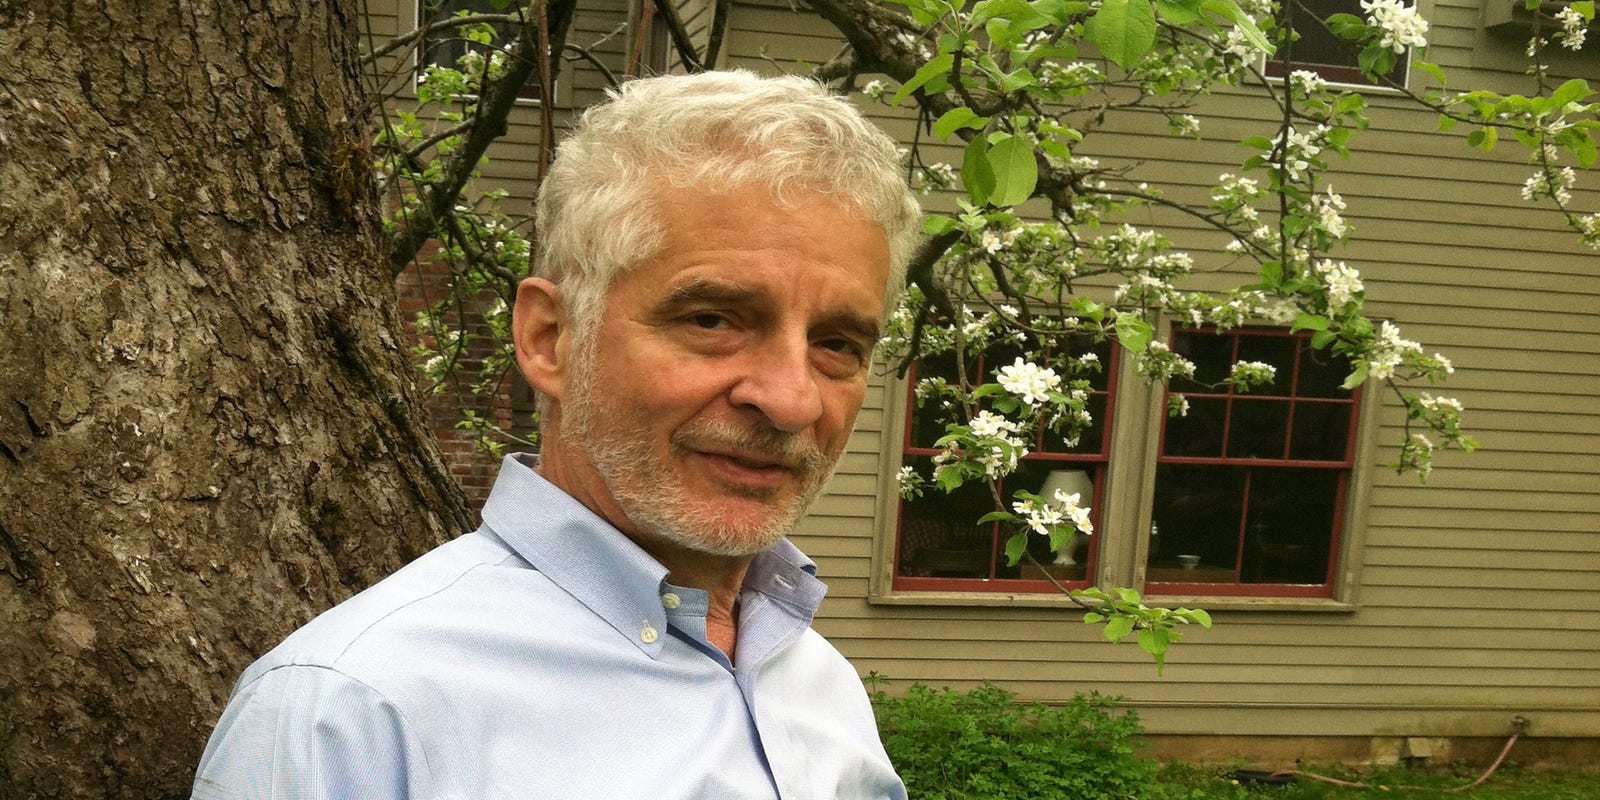 Award-winning author and editor Daniel Menaker passes away_40.1